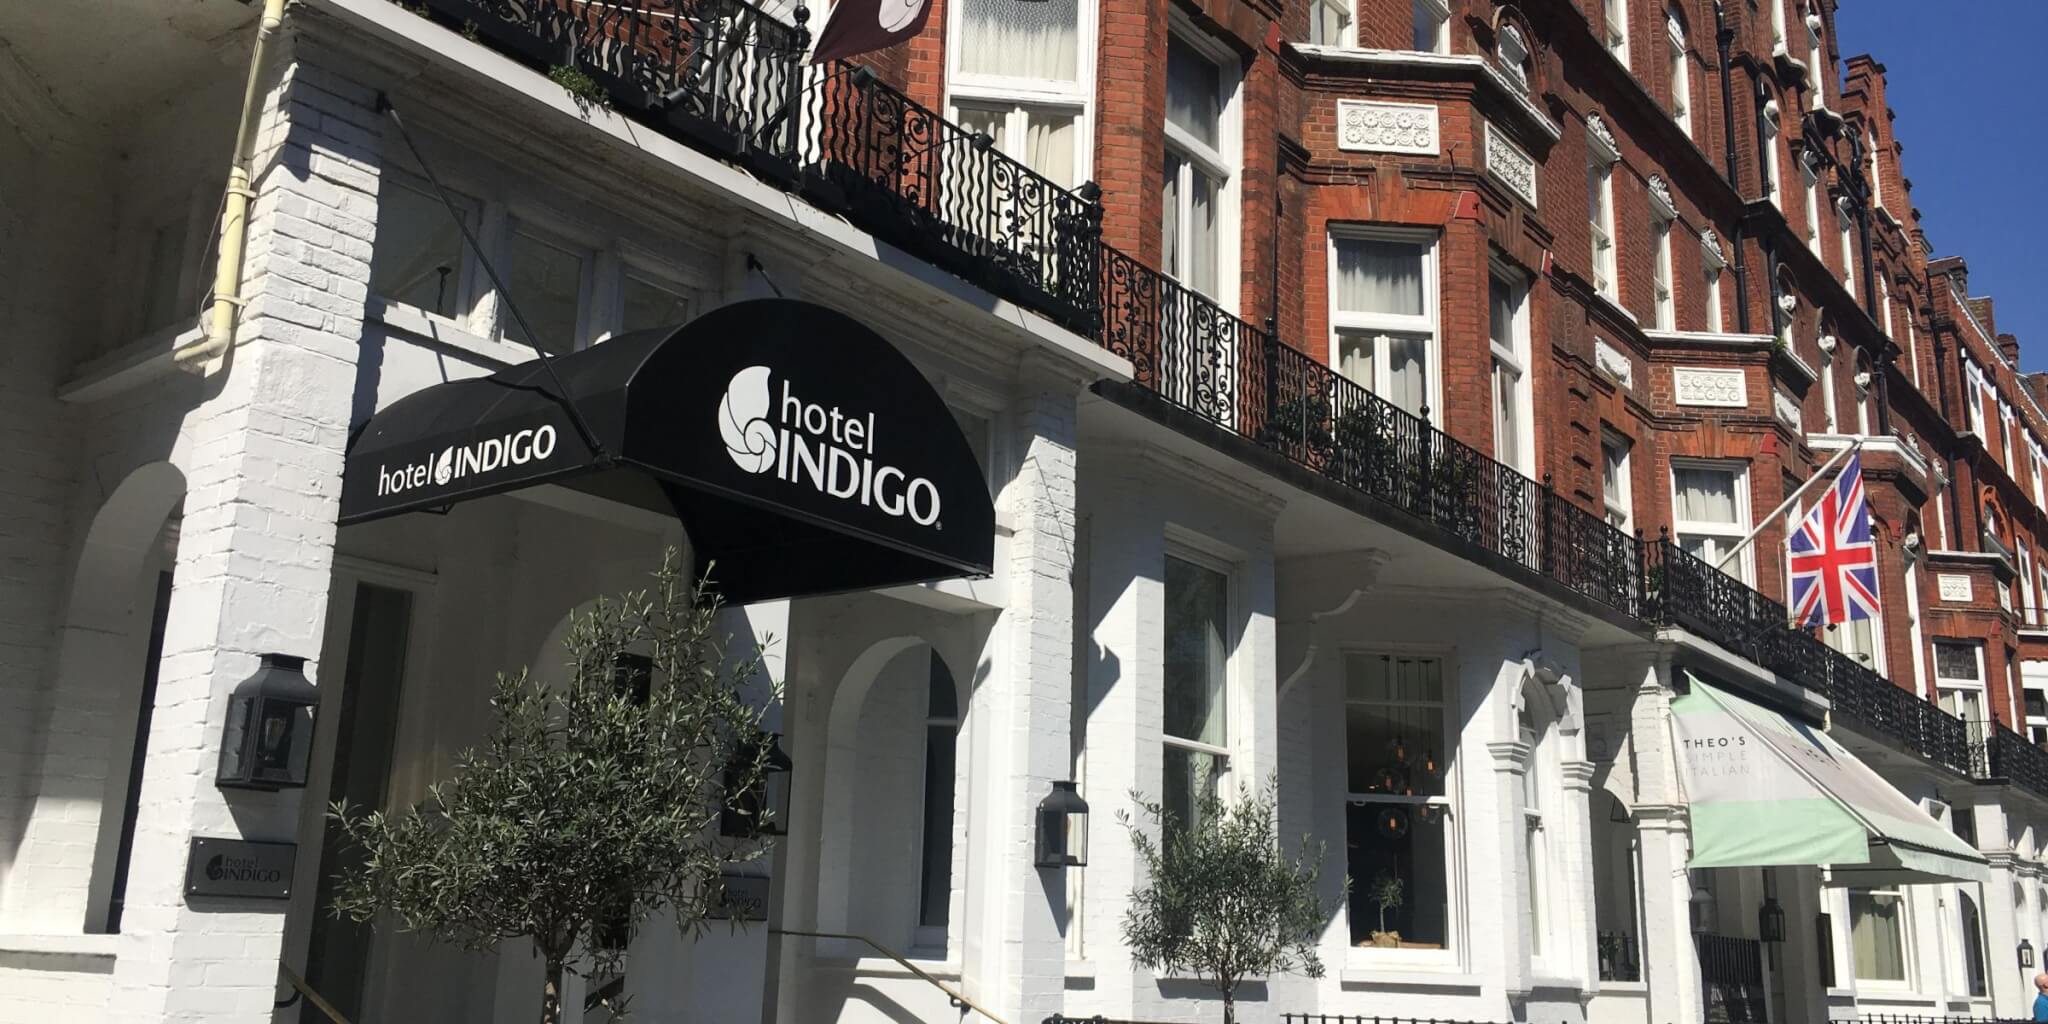 Hotel indigo London Entry